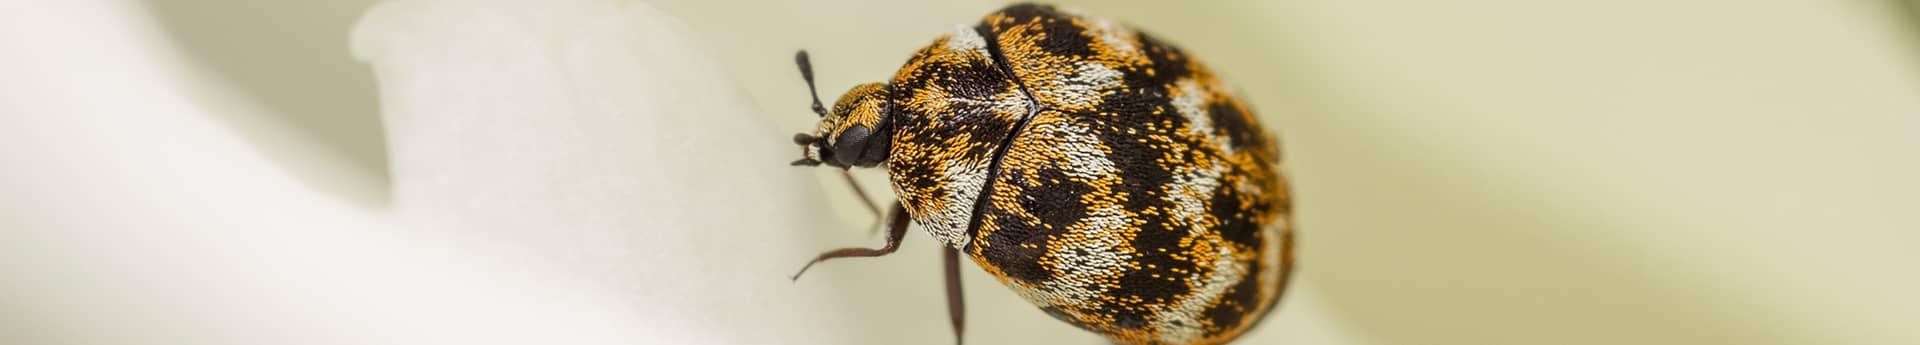 carpet beetle up close